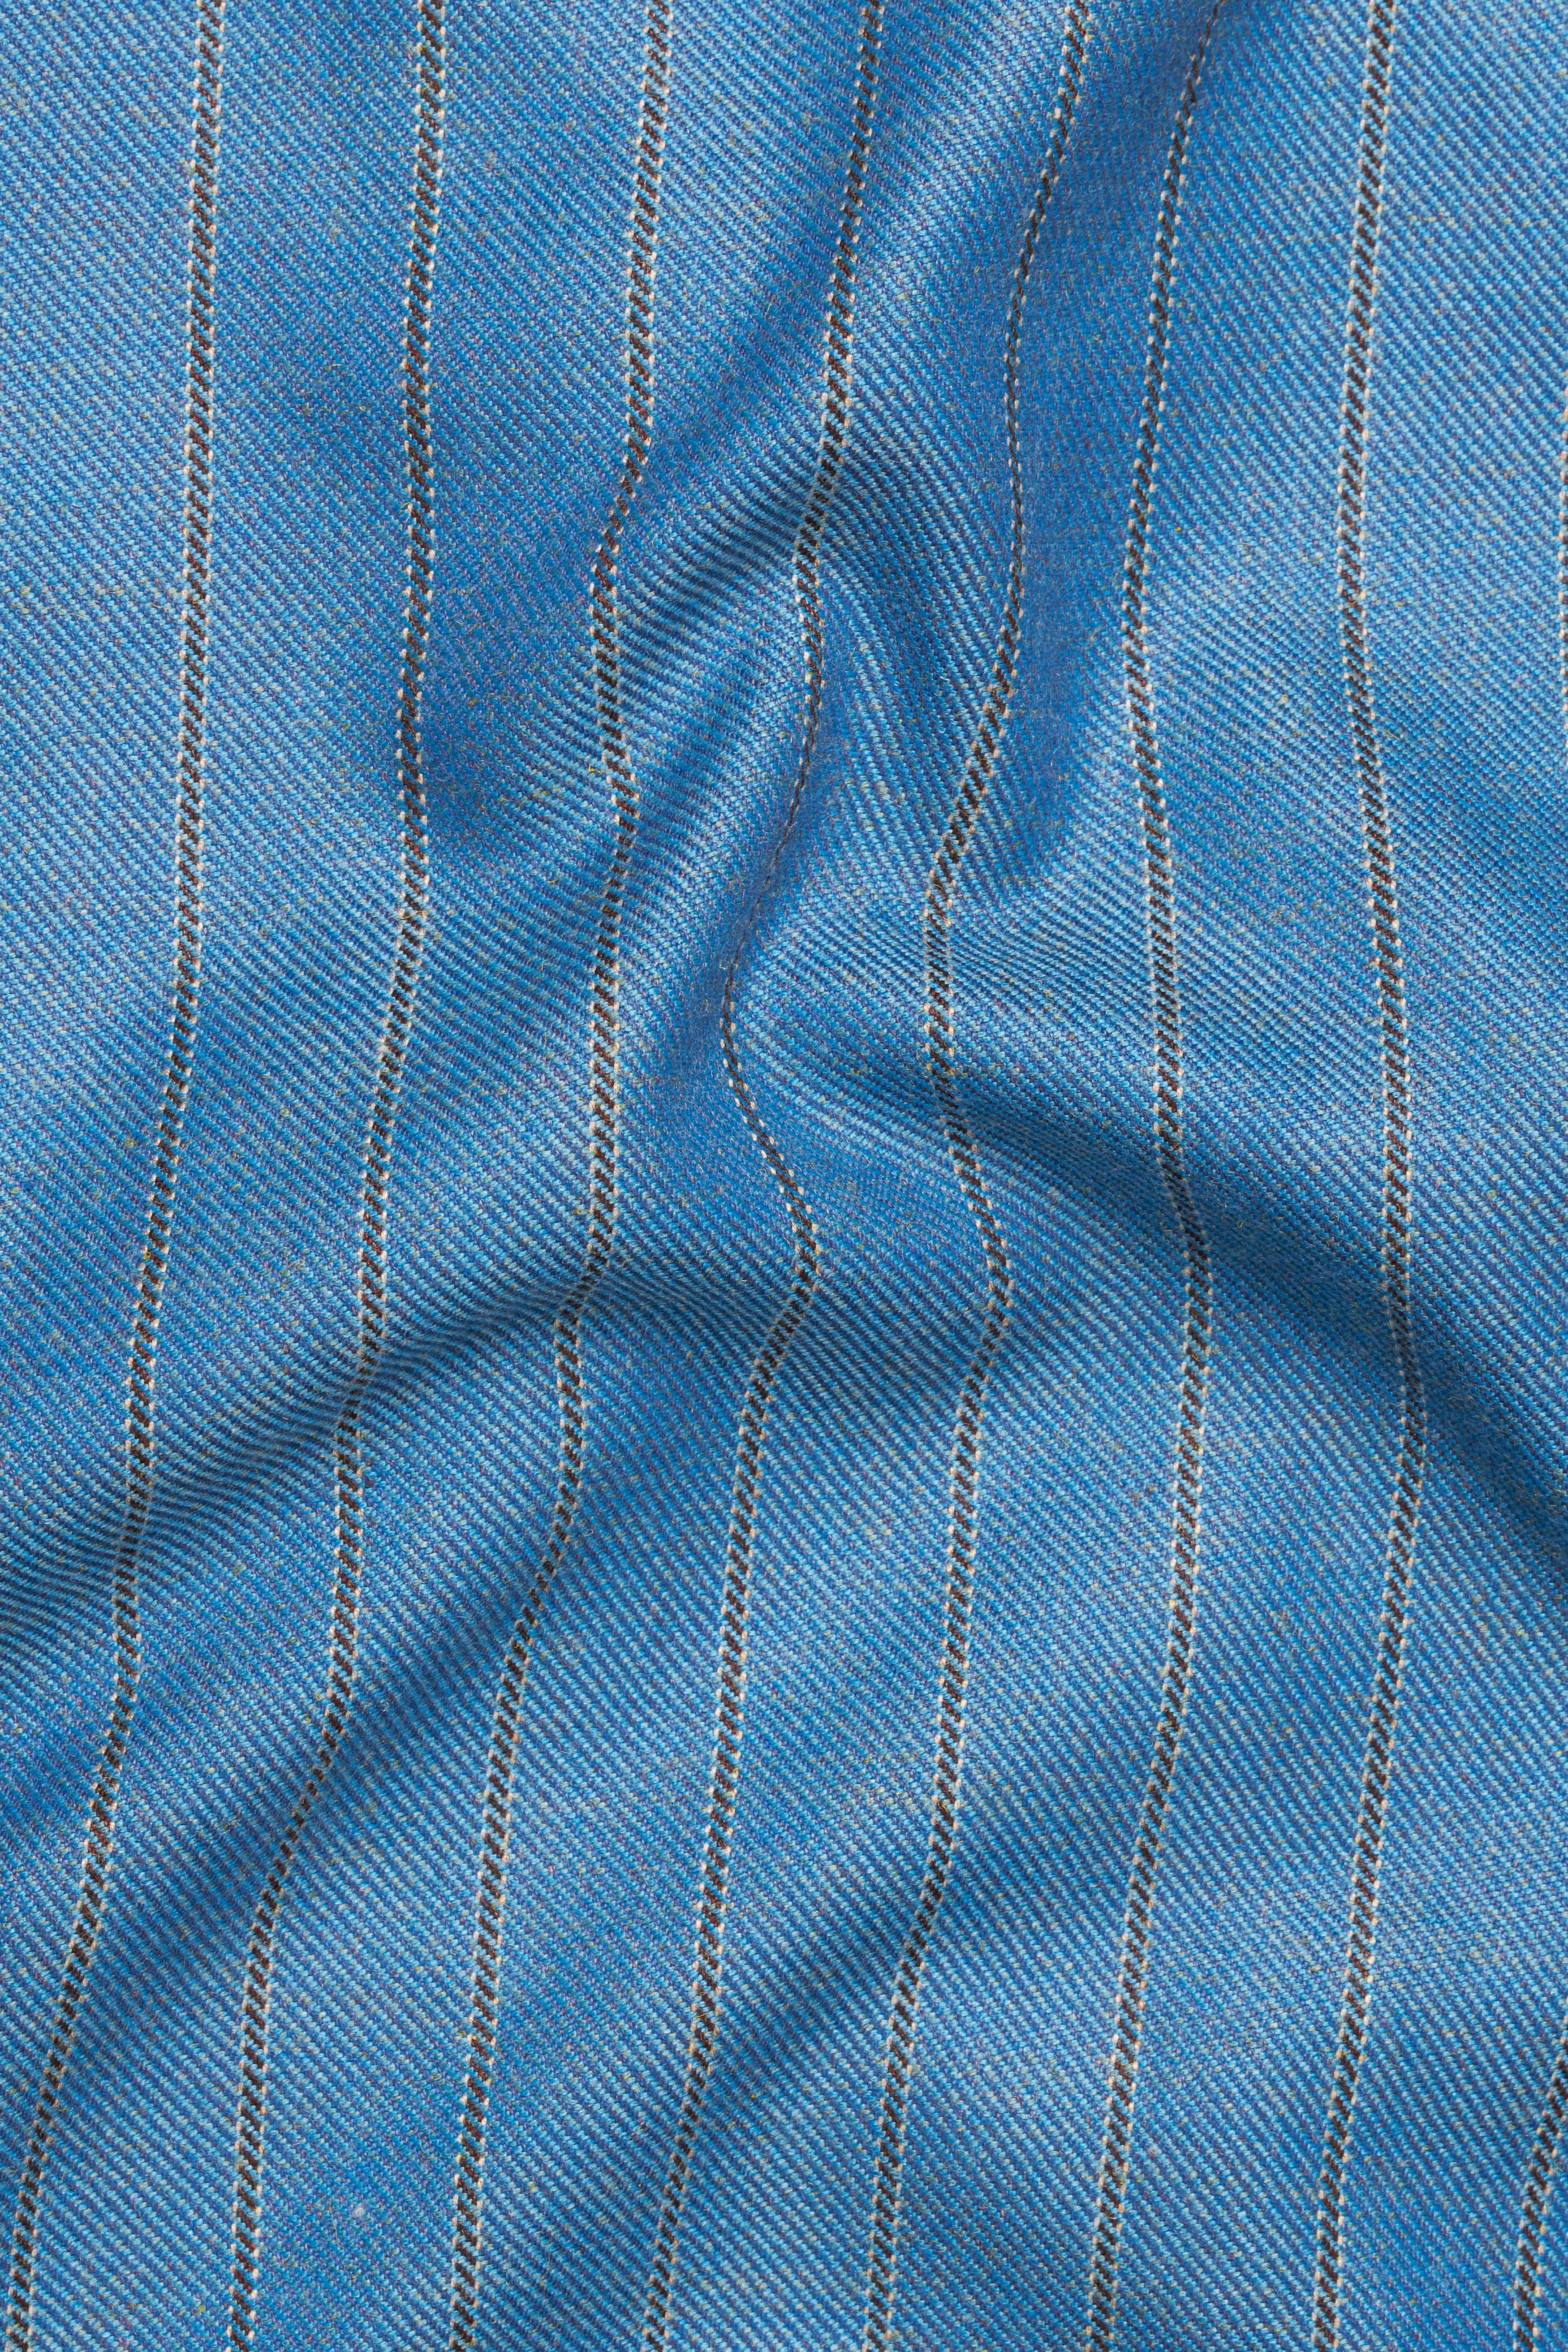 Wedgewood Blue Subtle Striped Tweed Waistcoat V2766-36, V2766-38, V2766-40, V2766-42, V2766-44, V2766-46, V2766-48, V2766-50, V2766-52, V2766-54, V2766-56, V2766-58, V2766-60